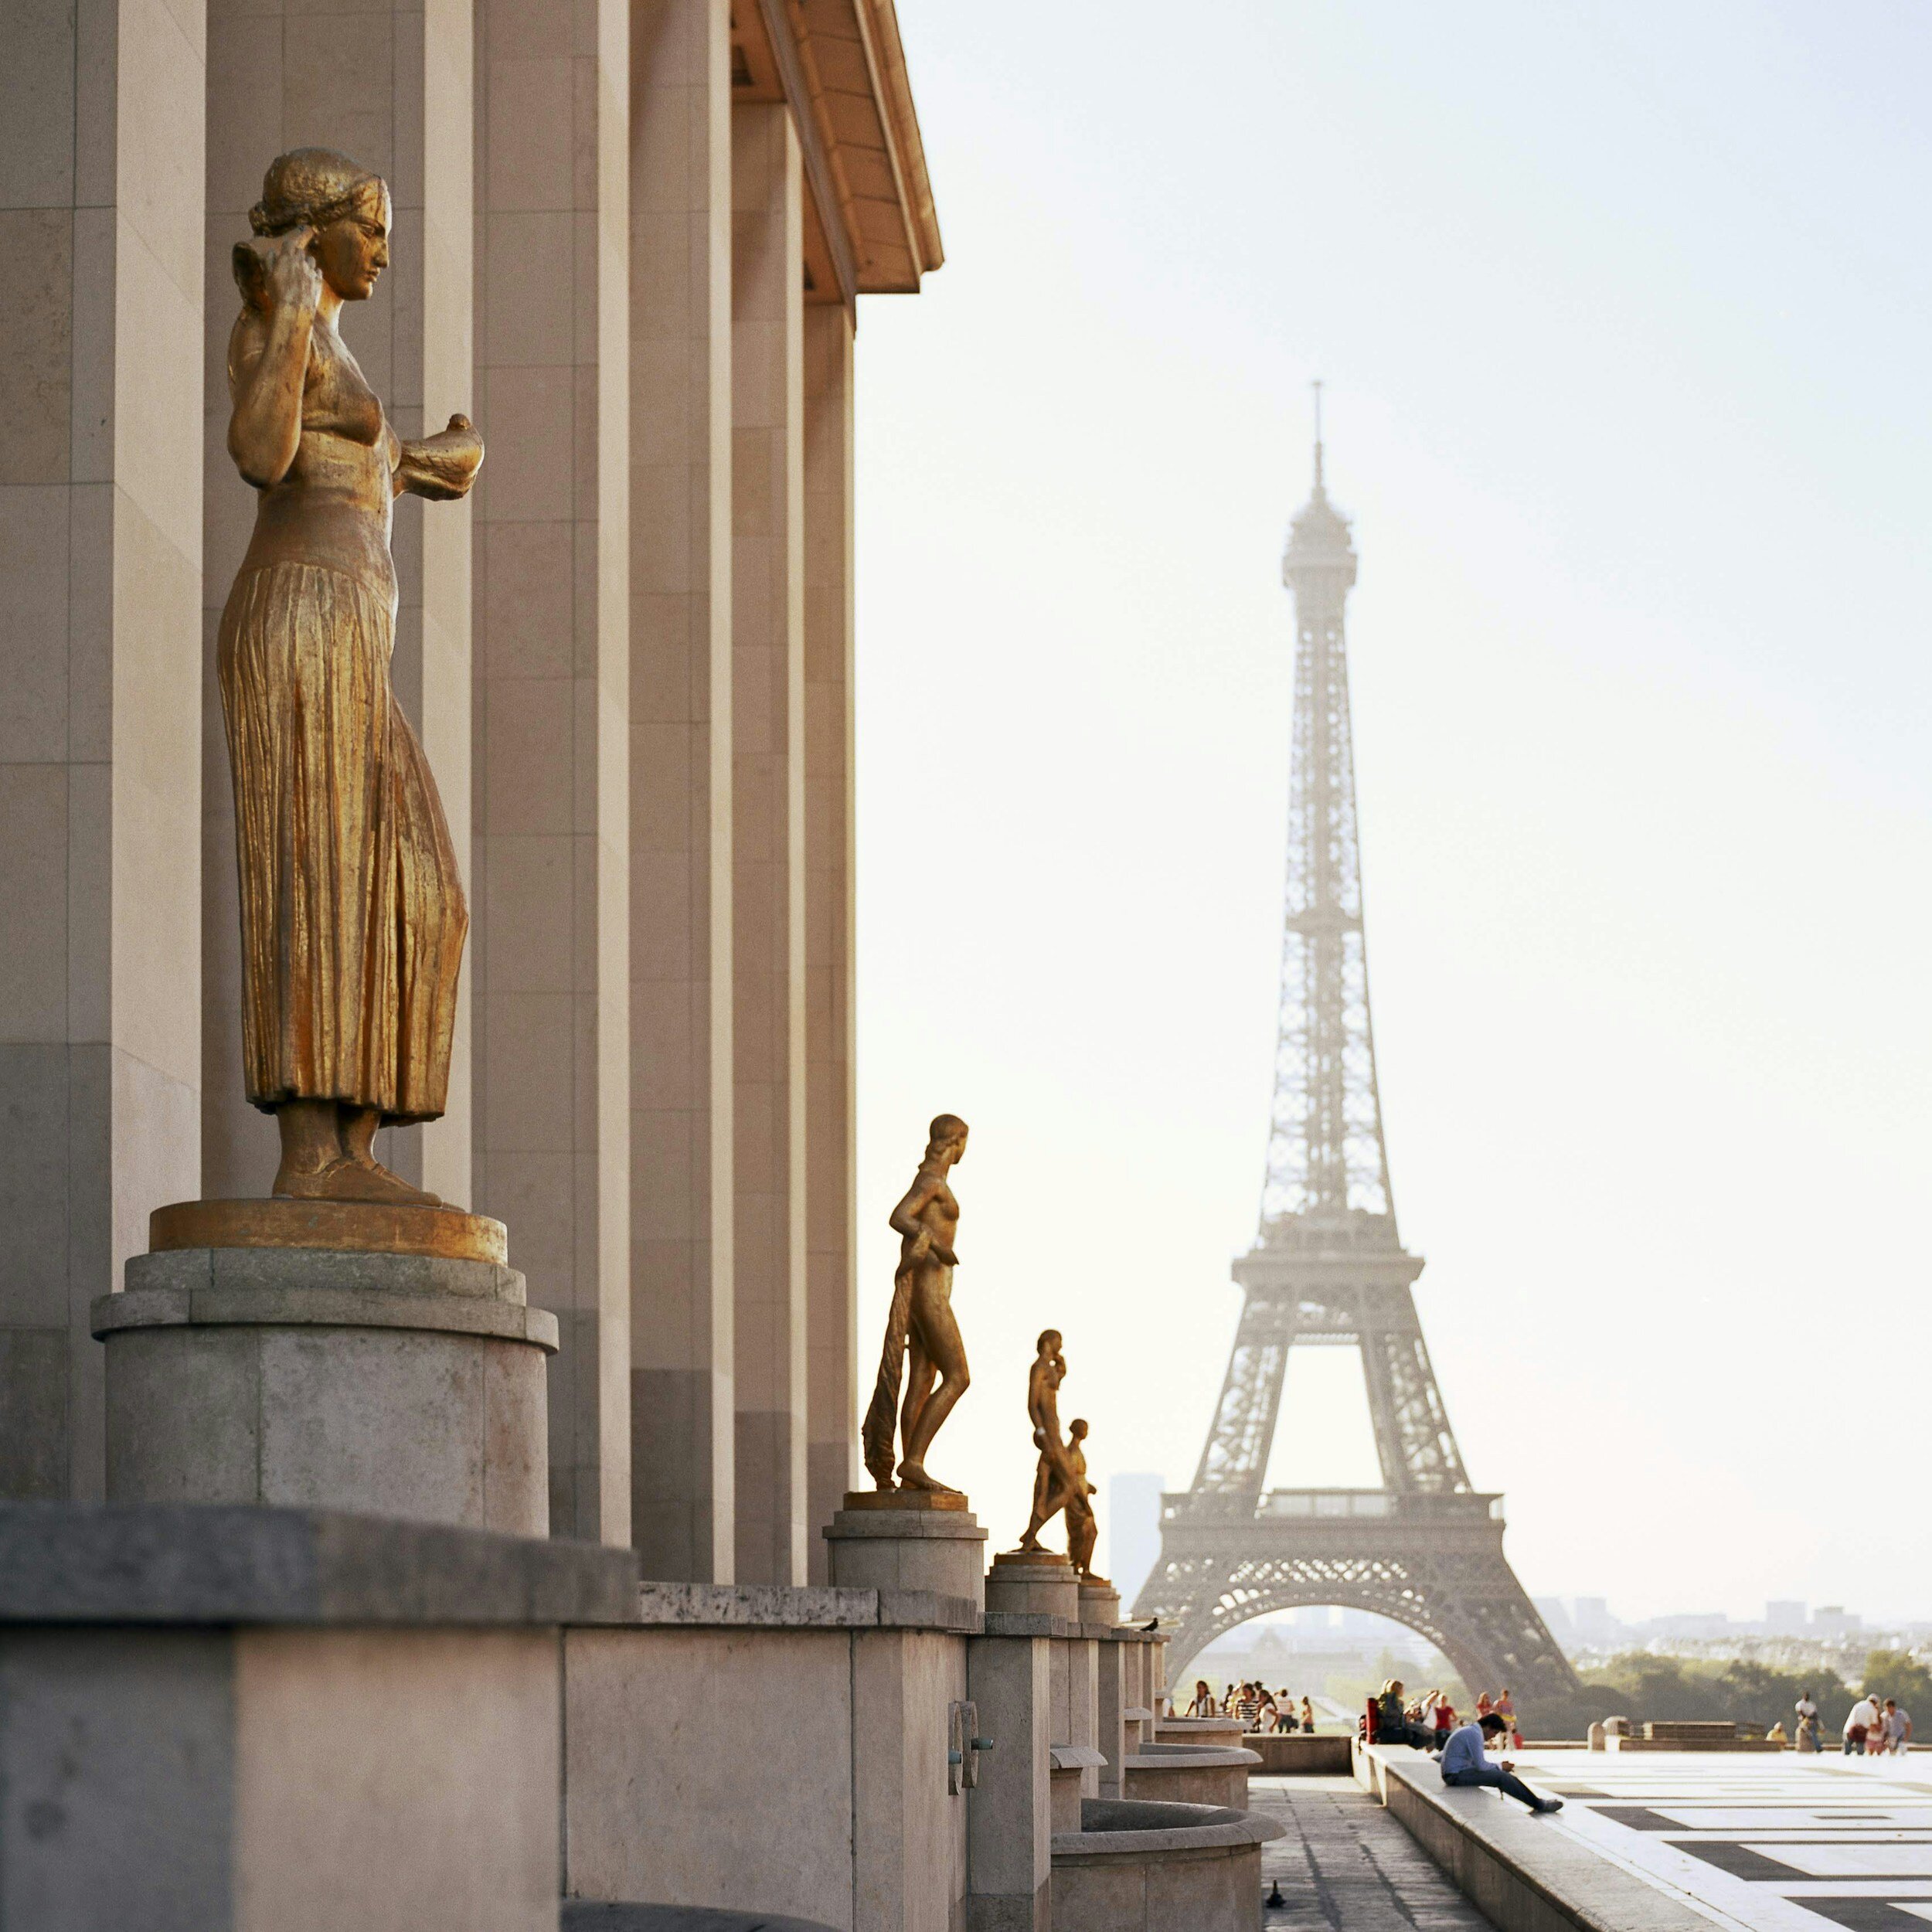 Place du Trocadéro in Paris to admire the Eiffel Tower